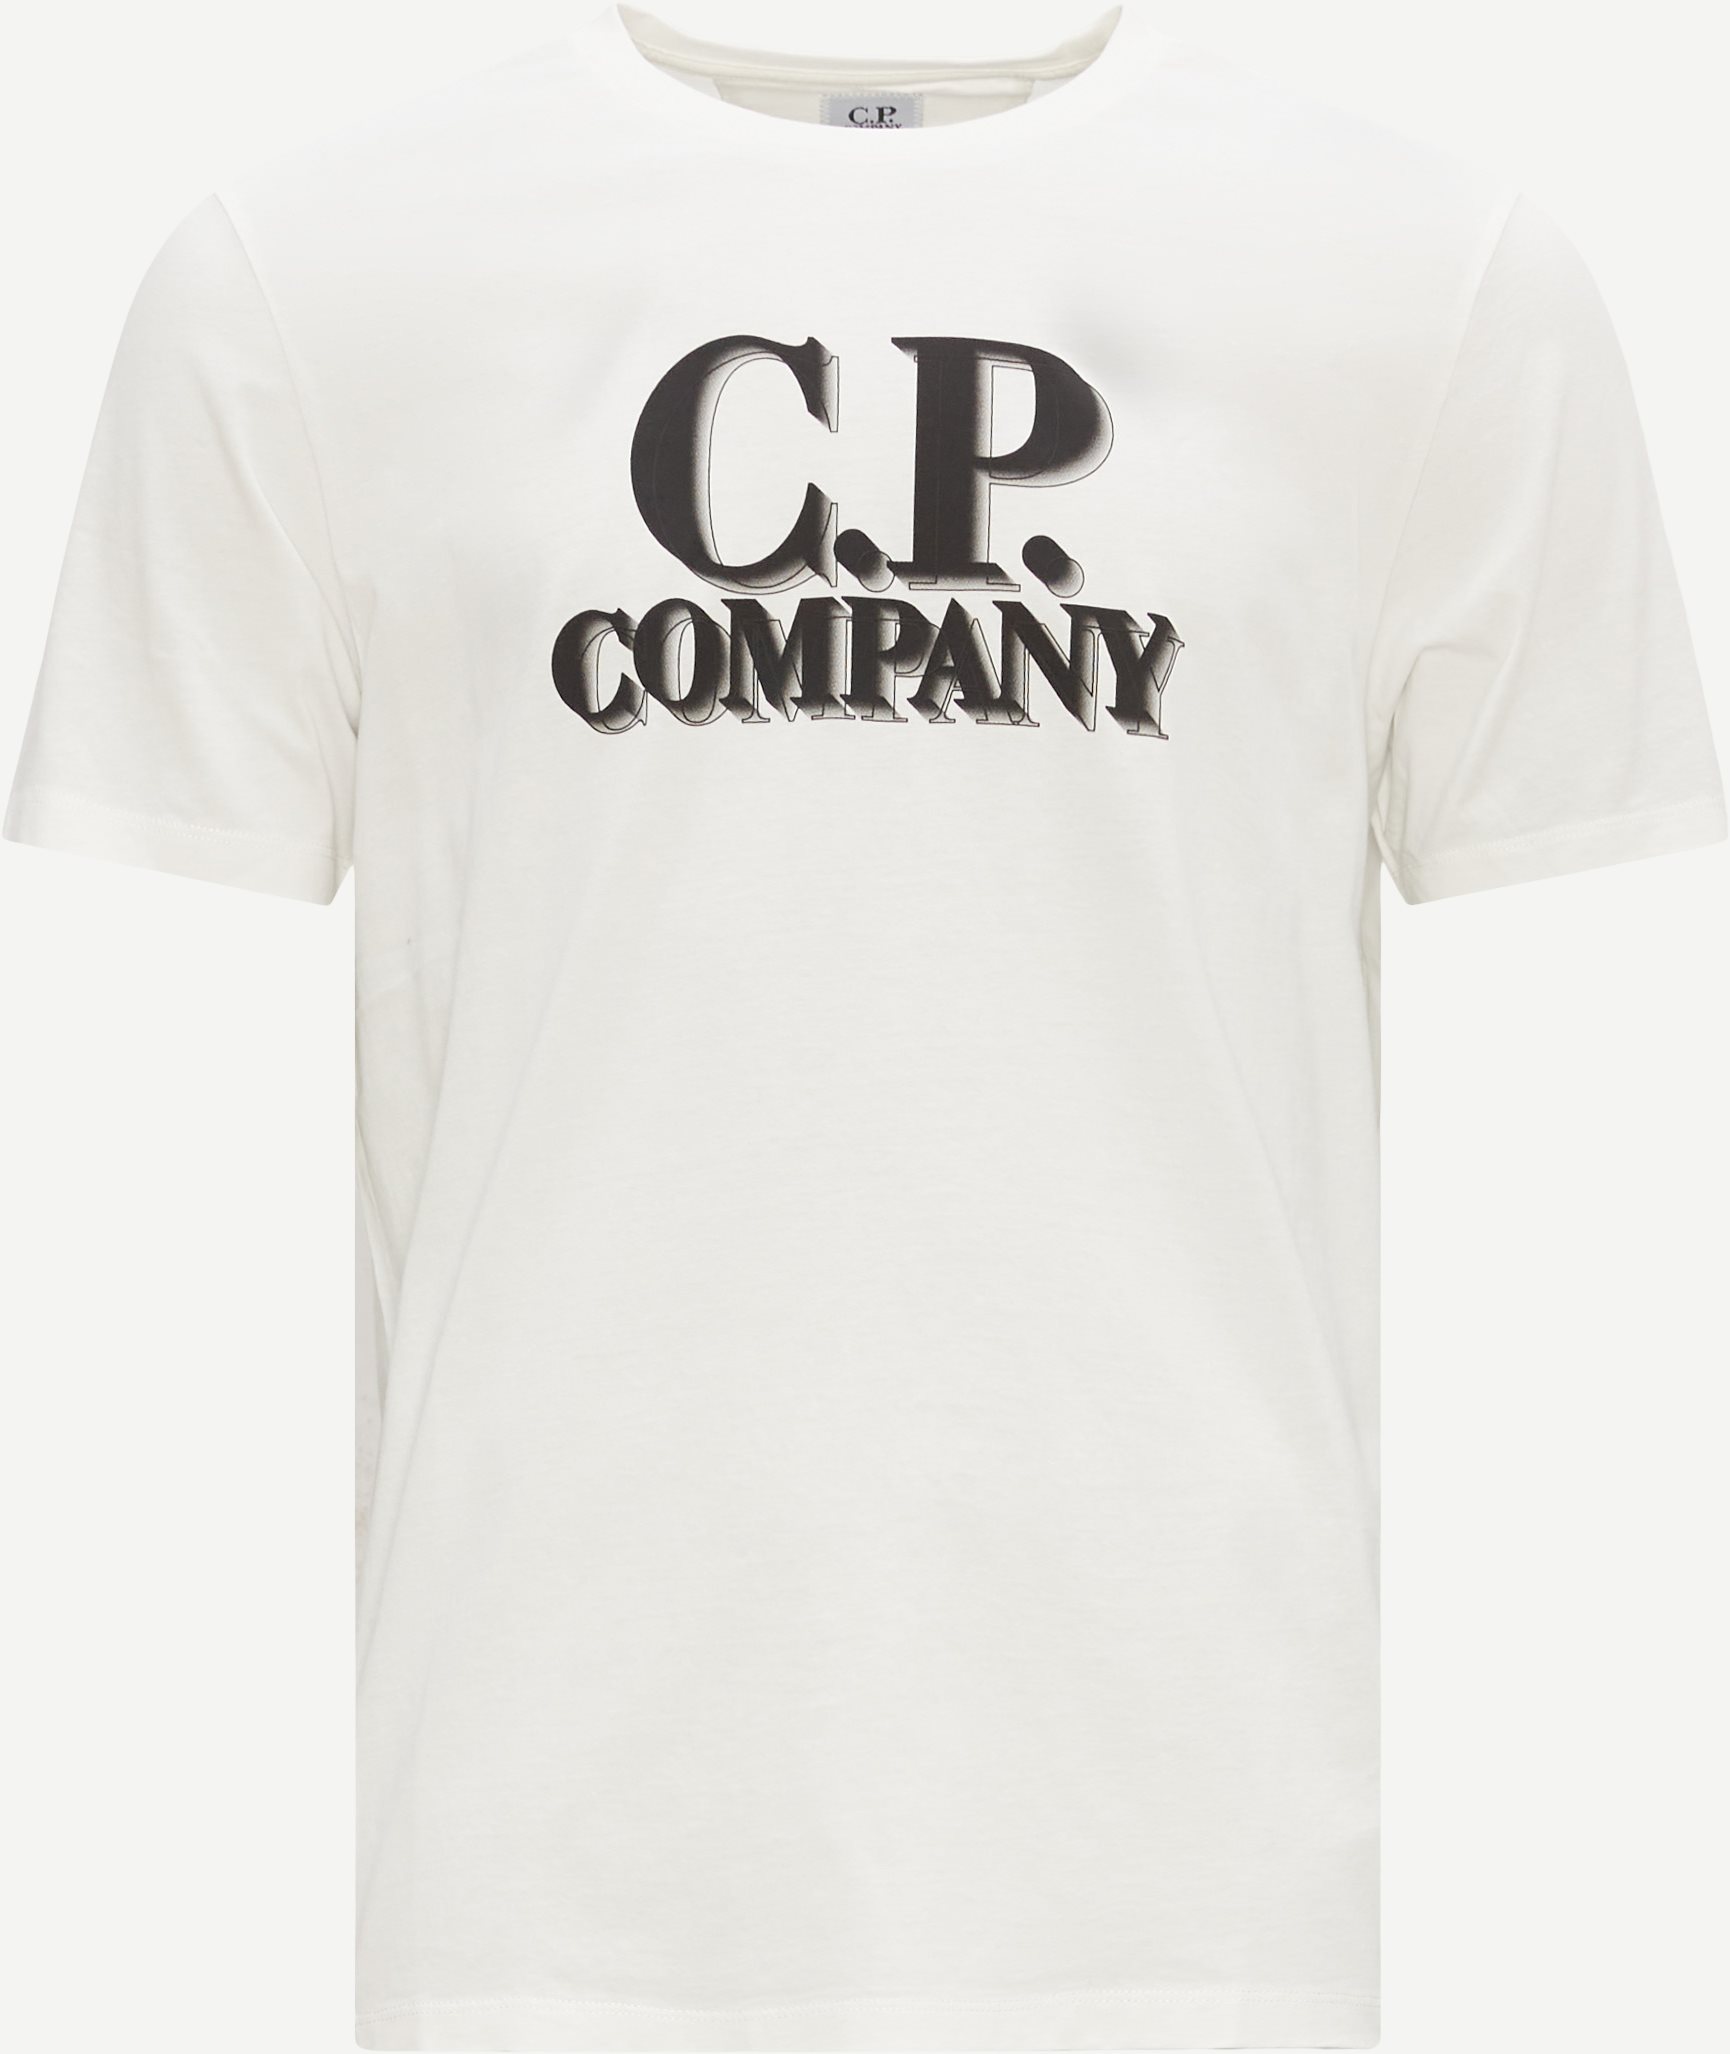 C.P. Company T-shirts TS238A 005100W Vit